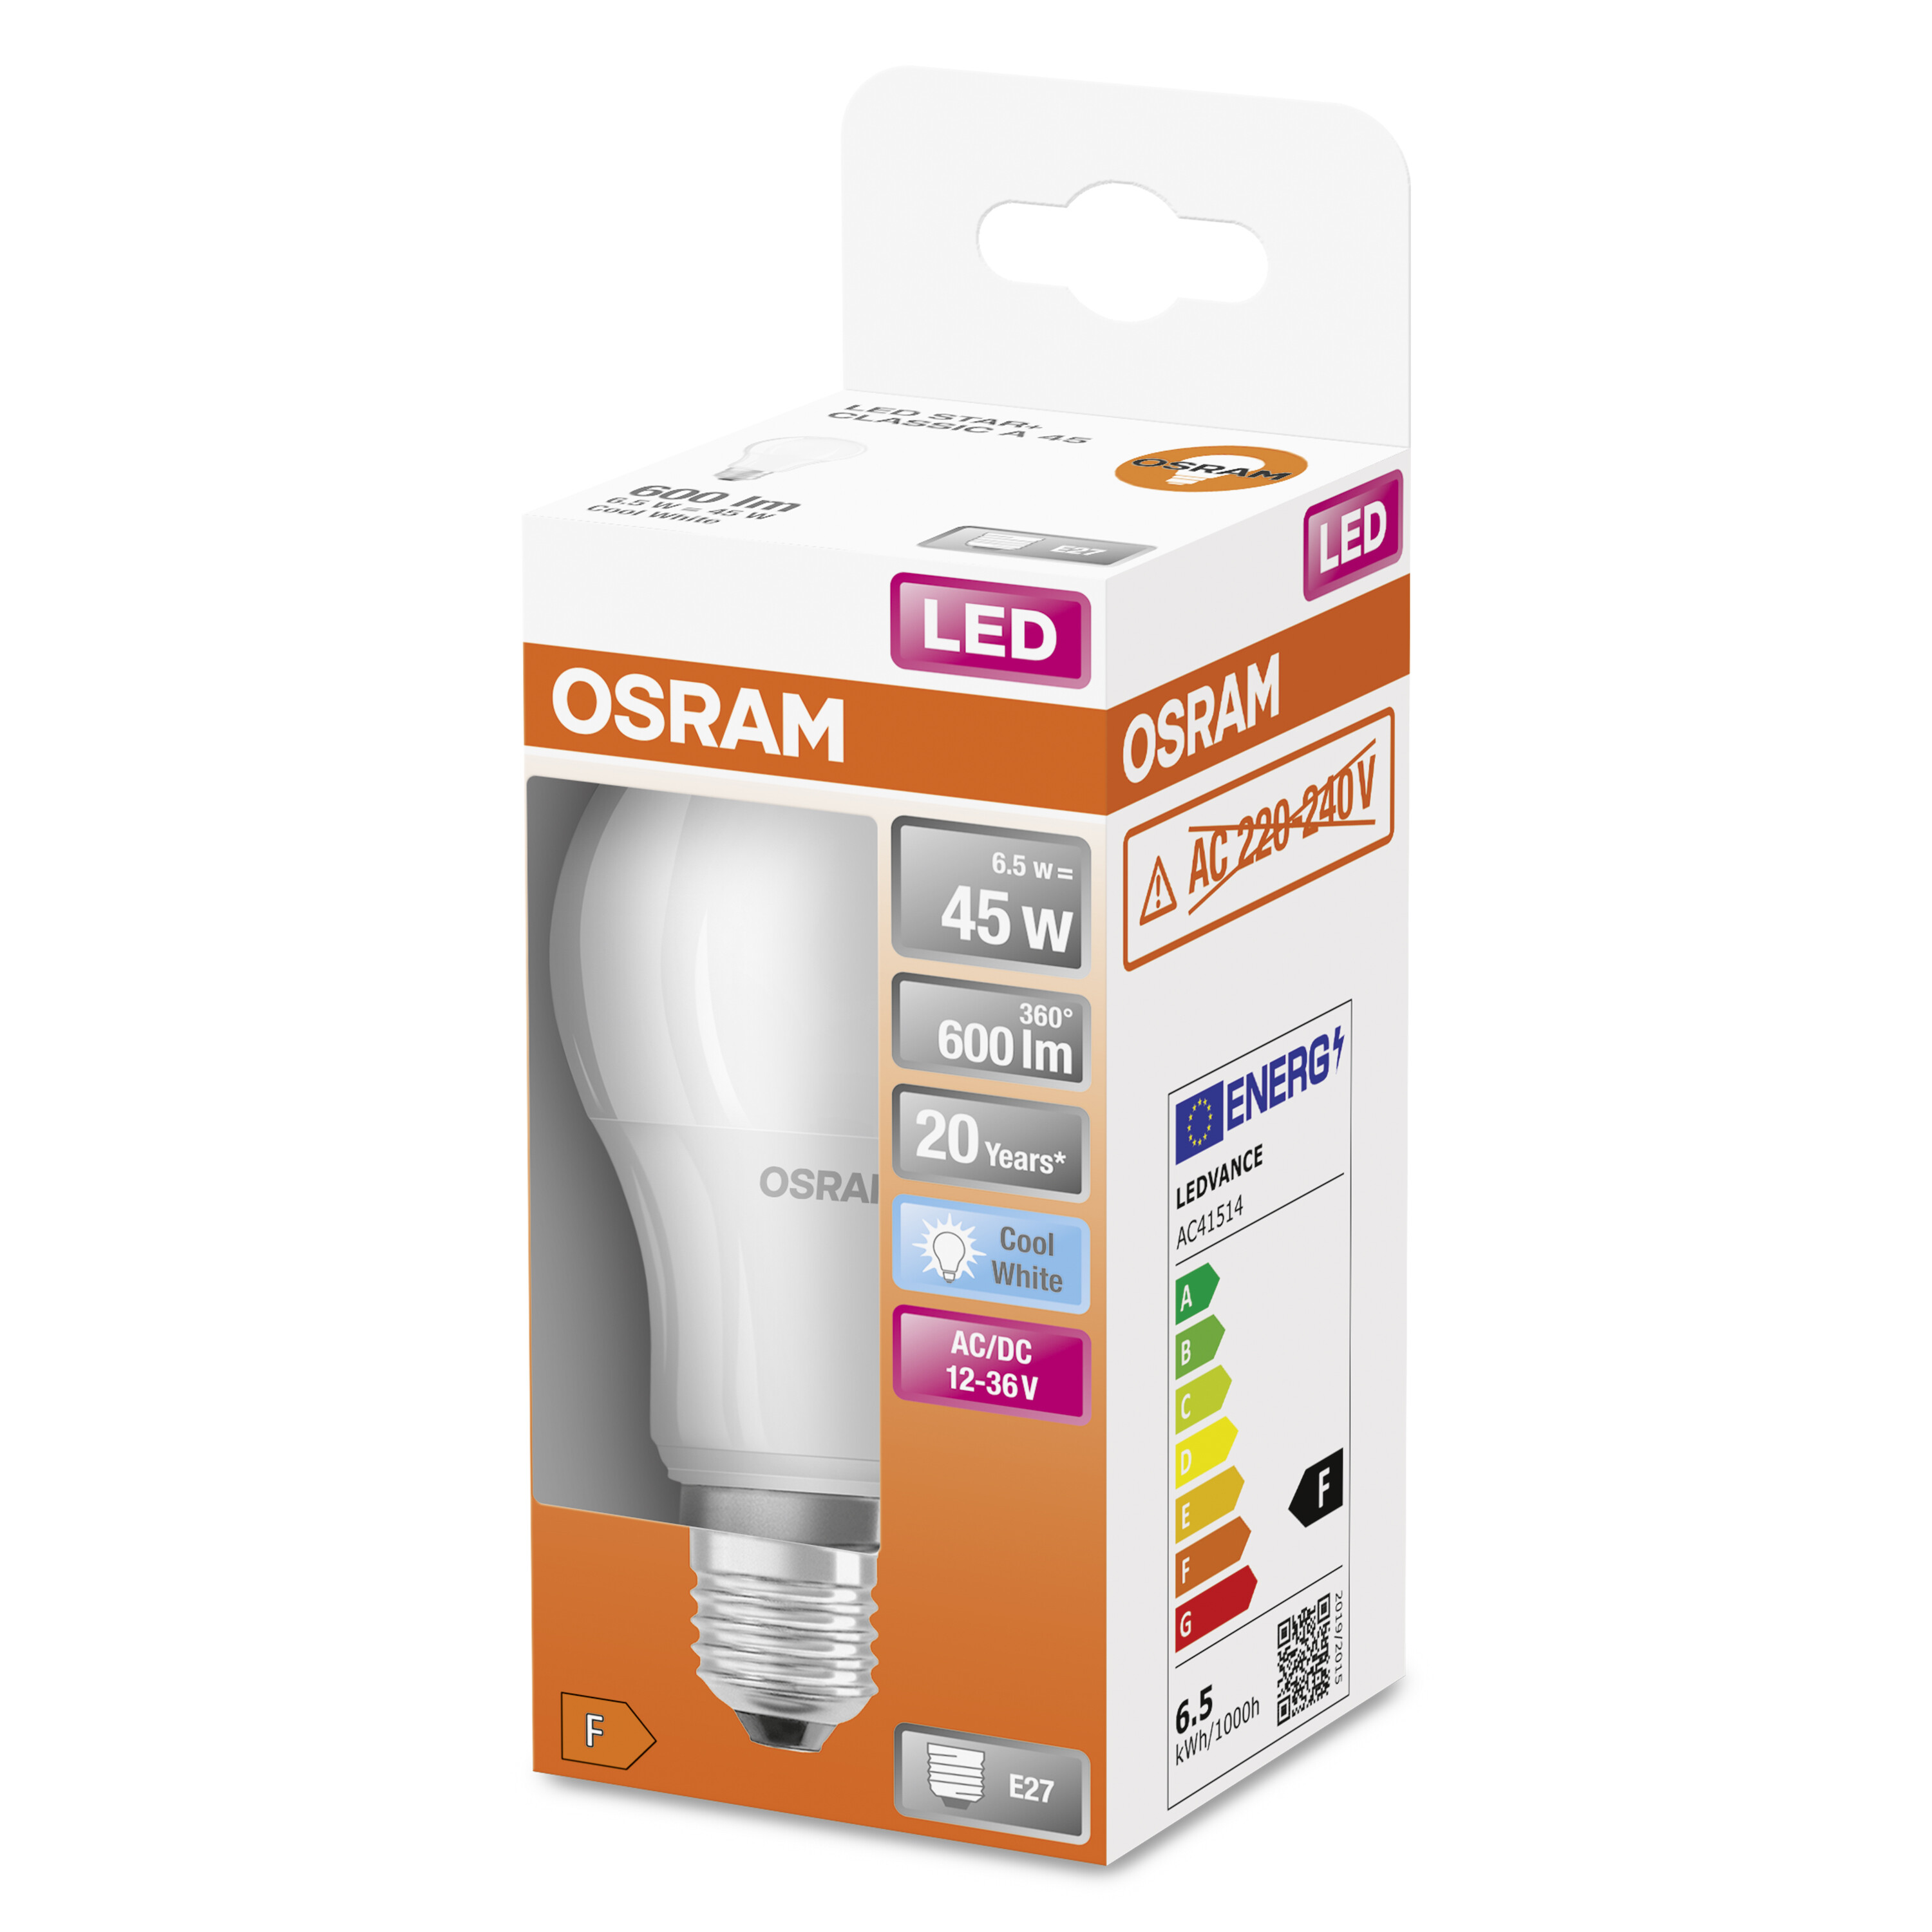 Lumen 600 OSRAM  CLASSIC Kaltweiß LED LOW STAR FOR Lampe LED VOLTAGE A